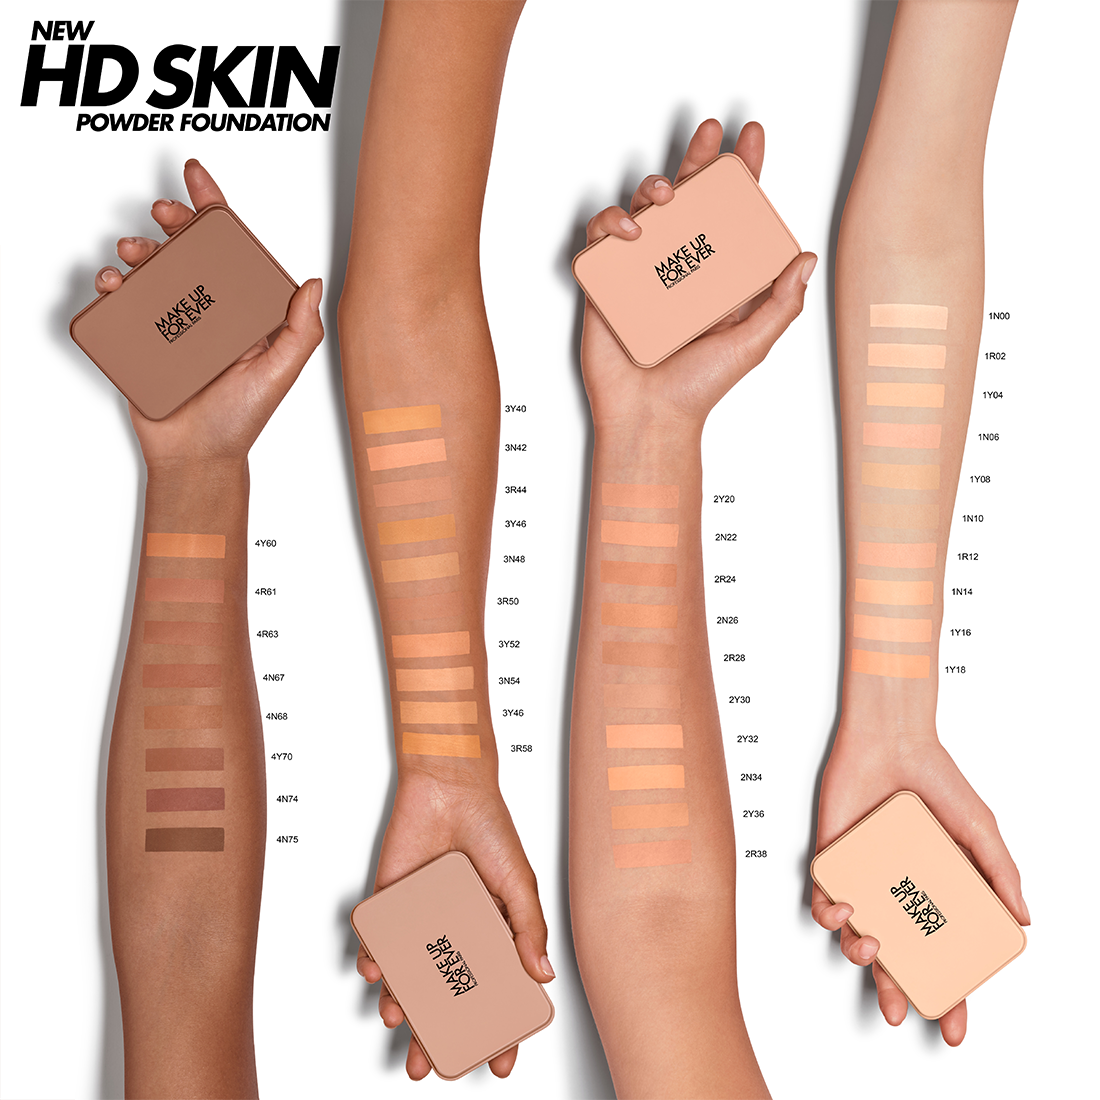 Make Up For Ever Hd Skin Powder Foundation 11G 4Y60 Warm Almond  